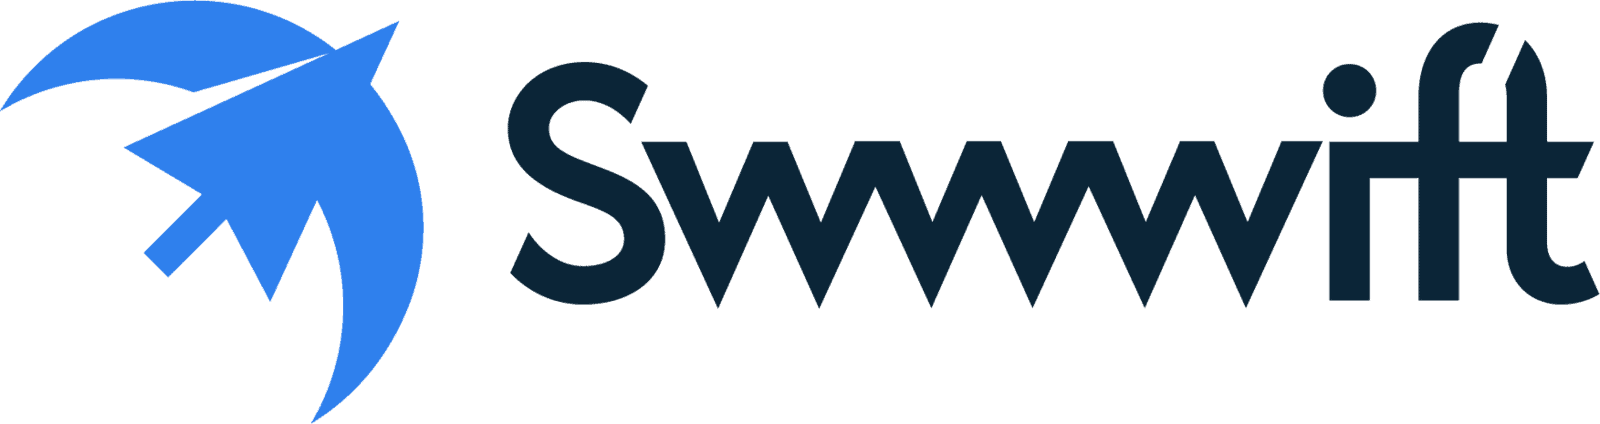 Swwwift_Brand FINAL AWK RGB Flat